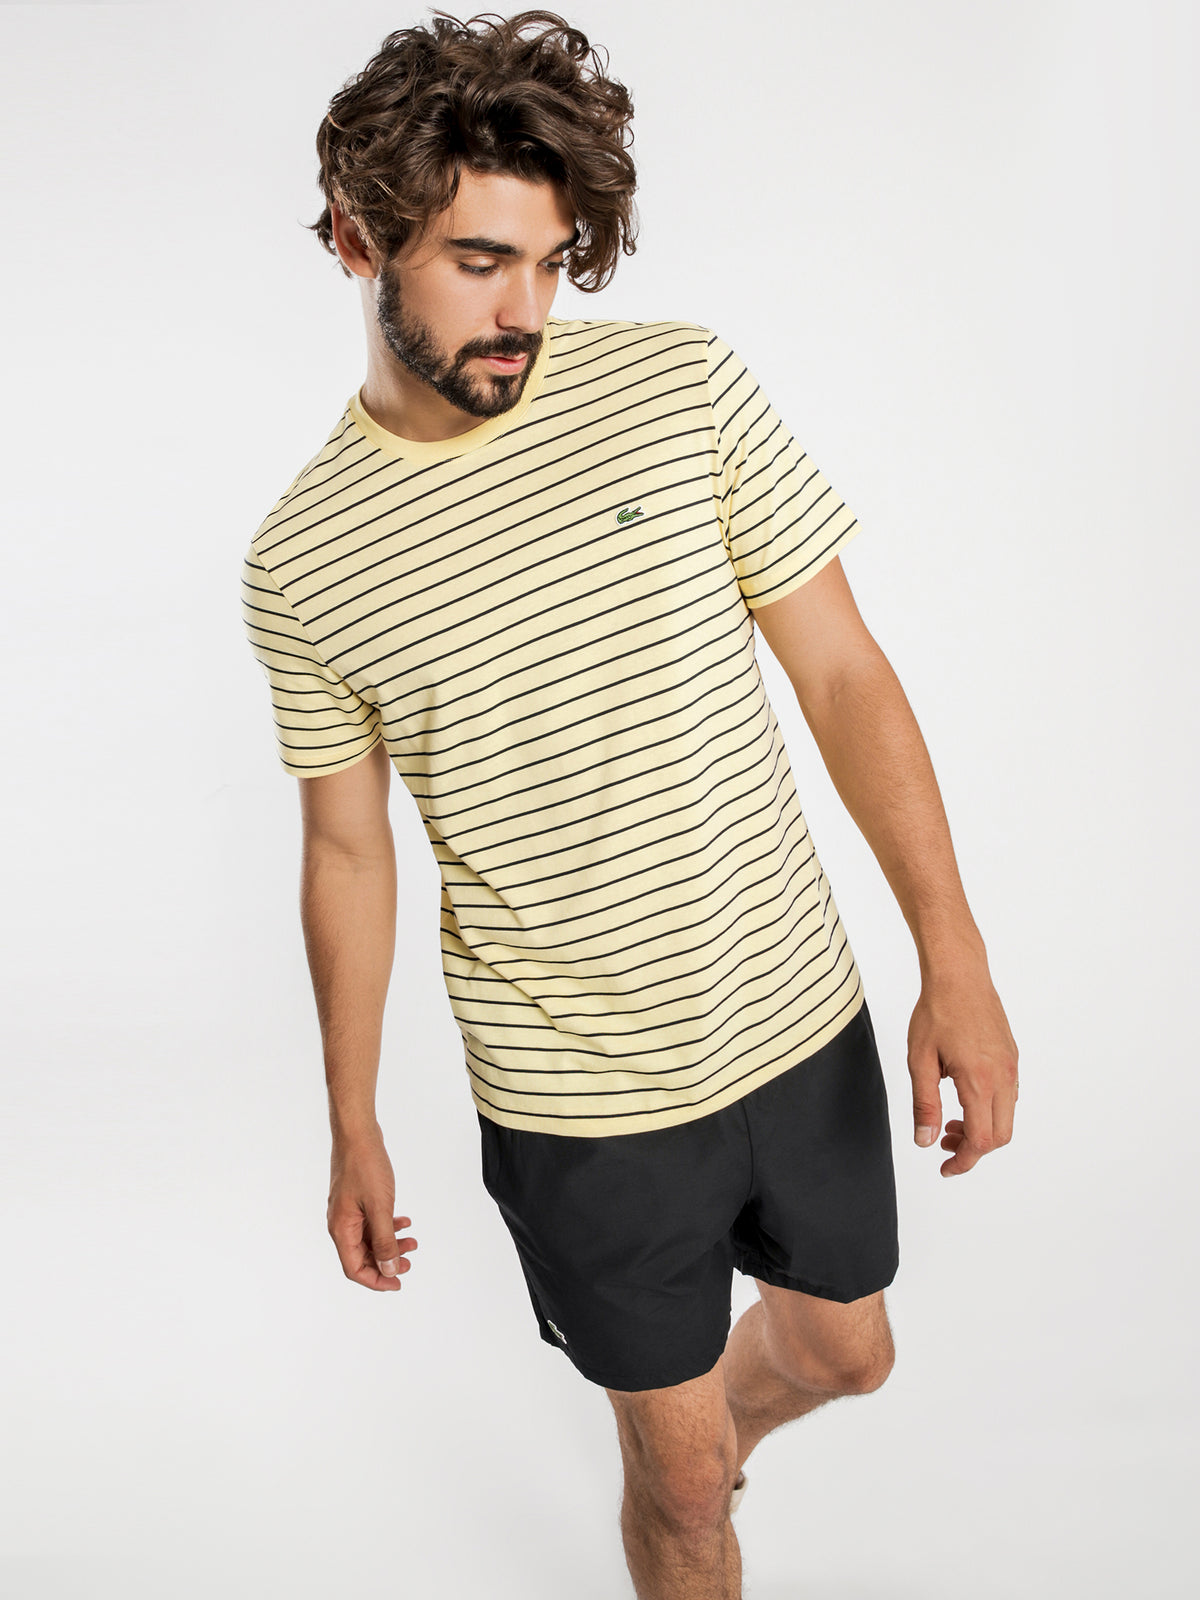 Jersey T-Shirt in Yellow &amp; White Stripe